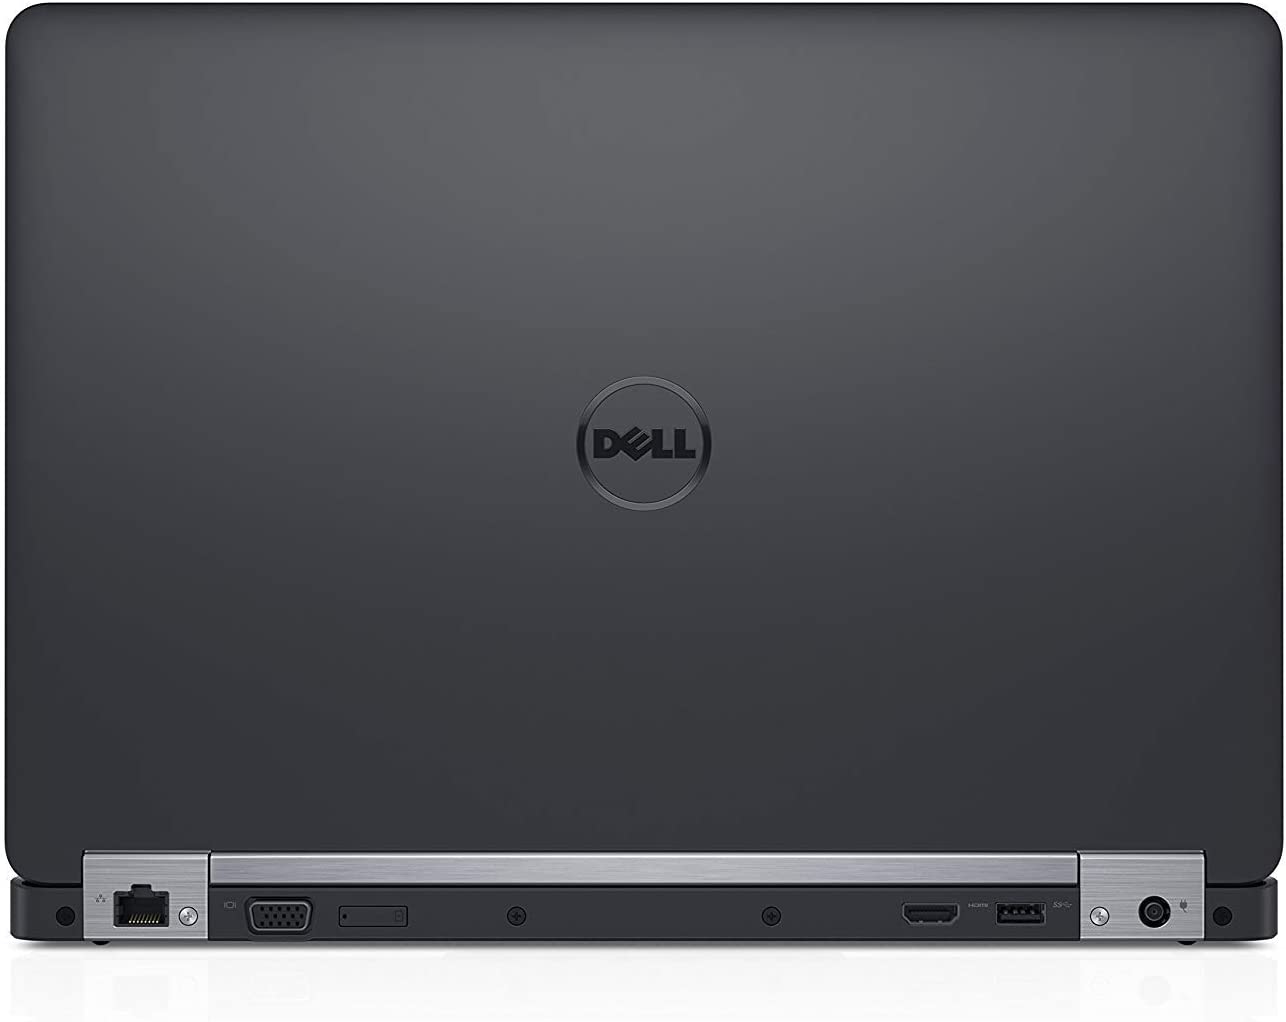 Dell Latitude E5470 HD Business Laptop Notebook PC Intel Core i7-6600U, 8GB Ram, 256GB SSD, HDMI, Camera, WiFi, Win 10 Pro (Renewed)